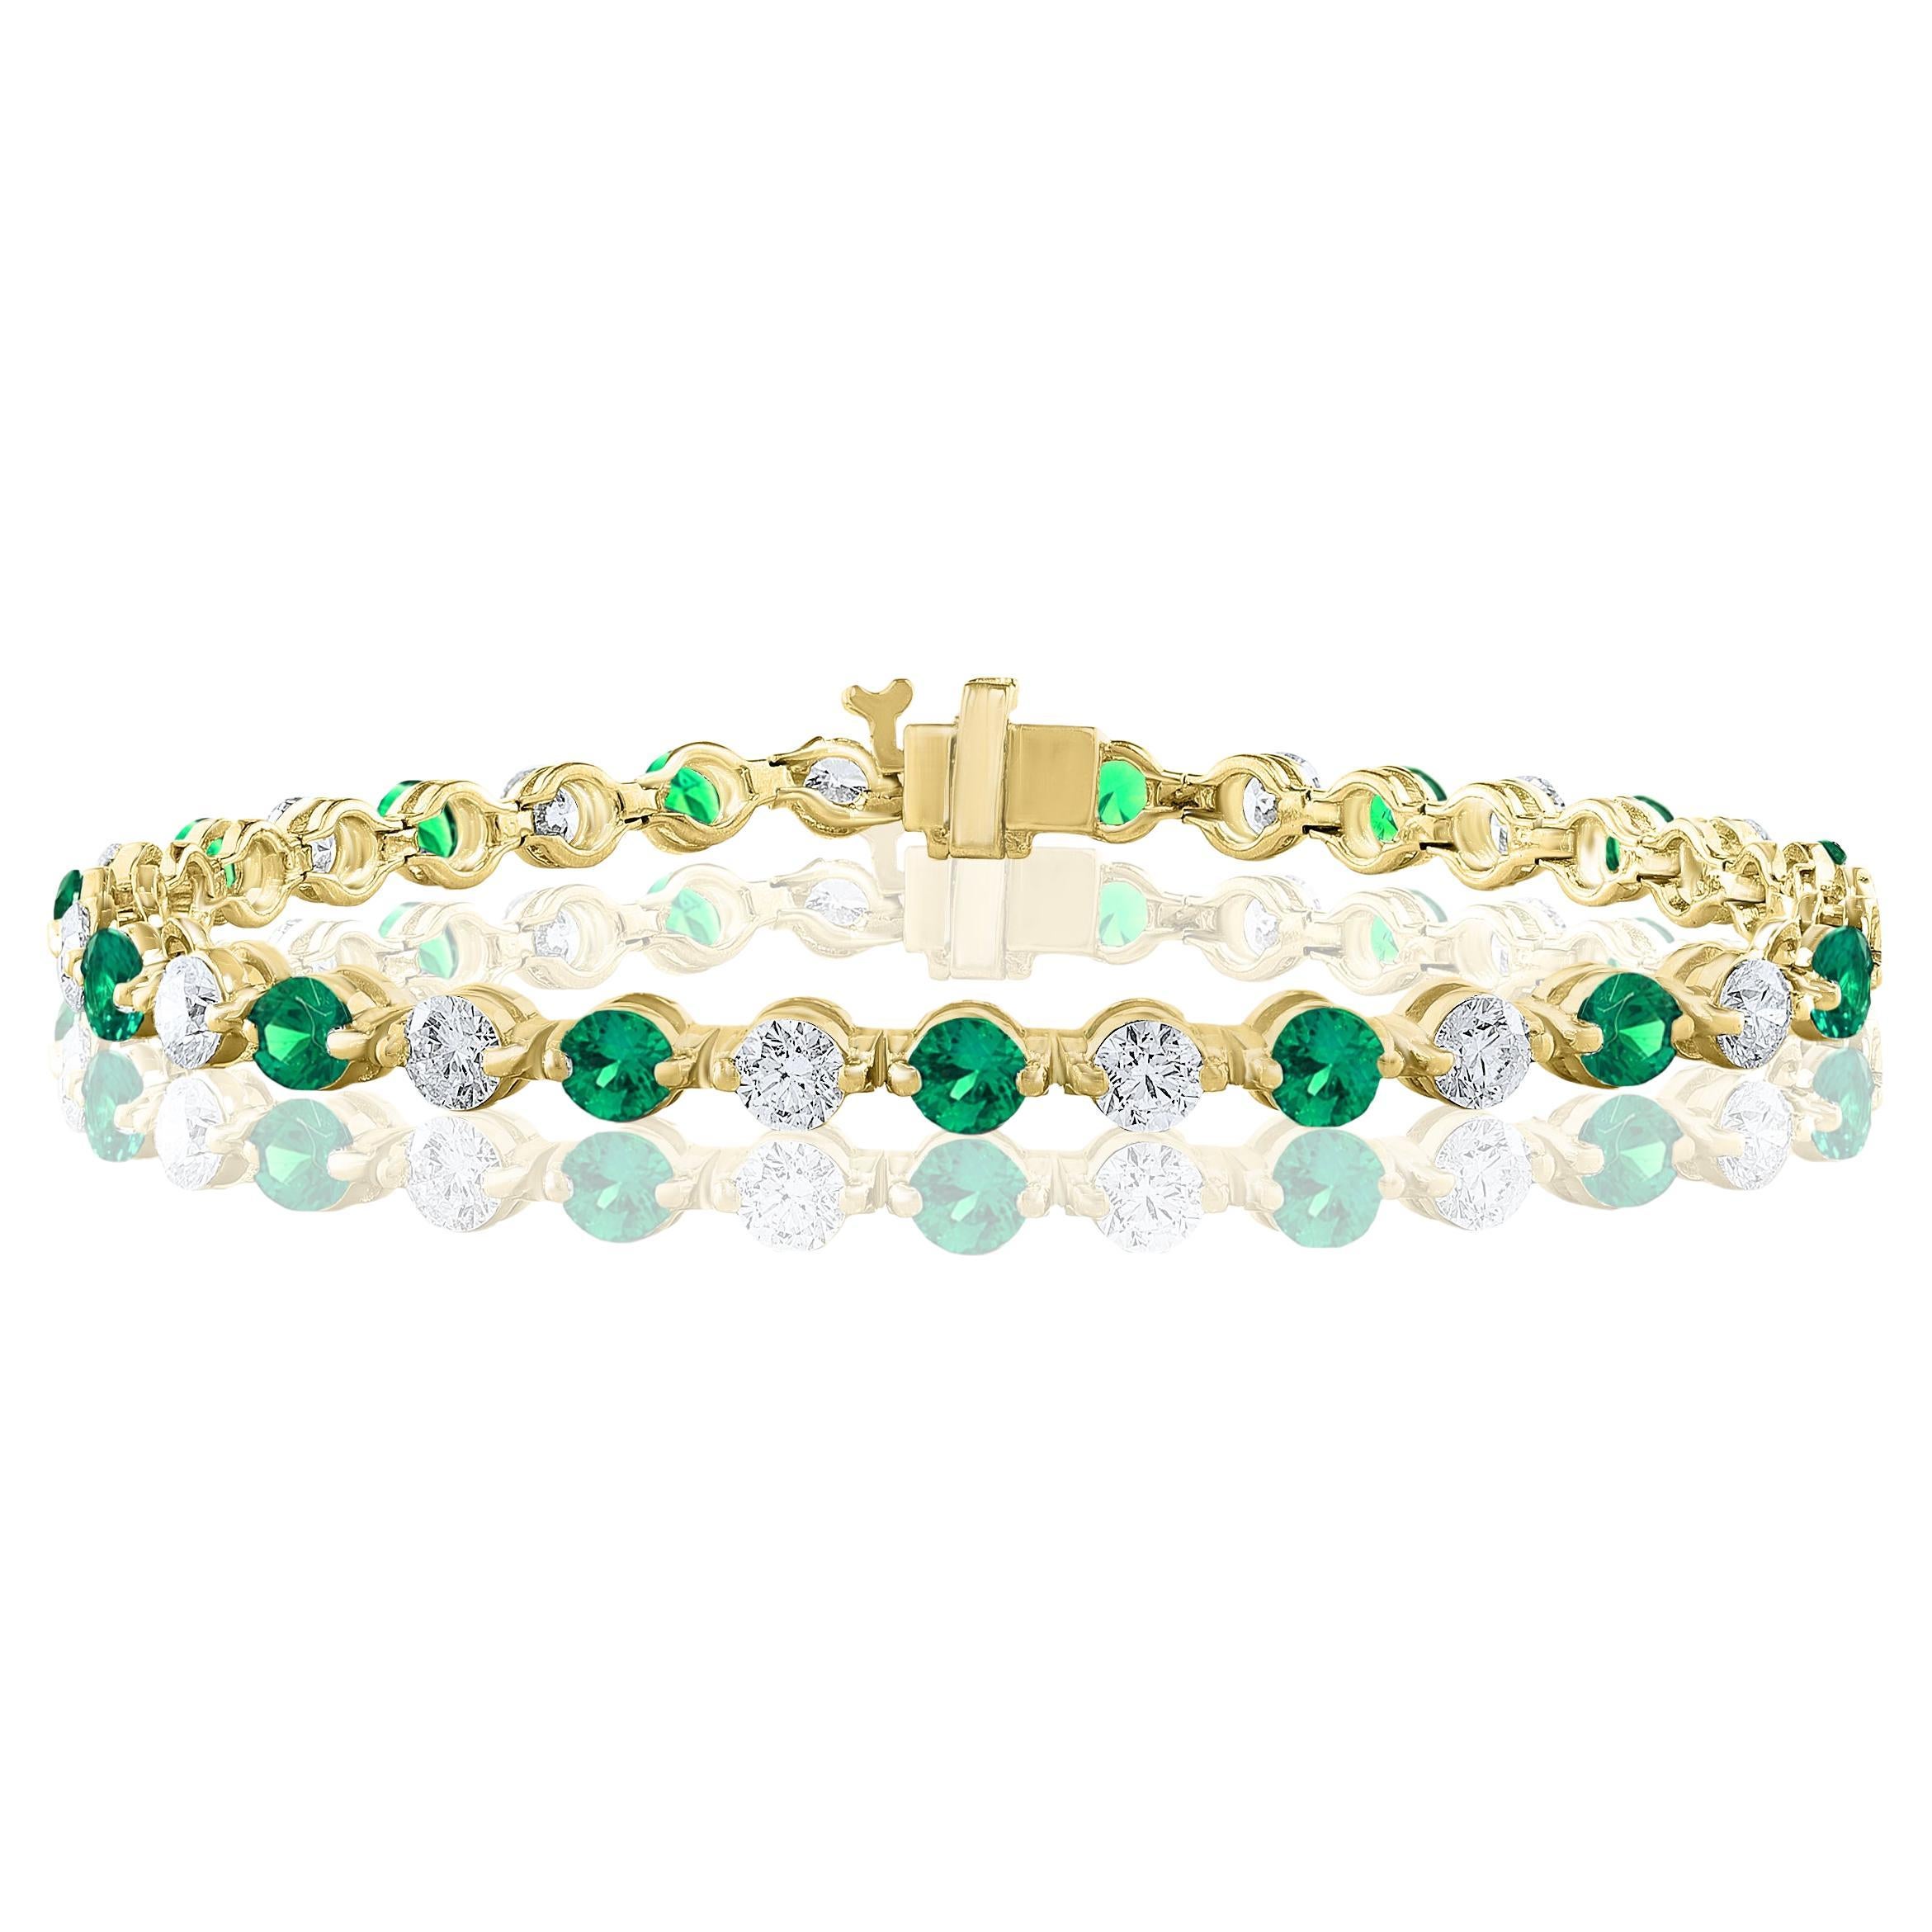 2.05 Carat Round Emerald and Diamond Bracelet in 14K Yellow Gold